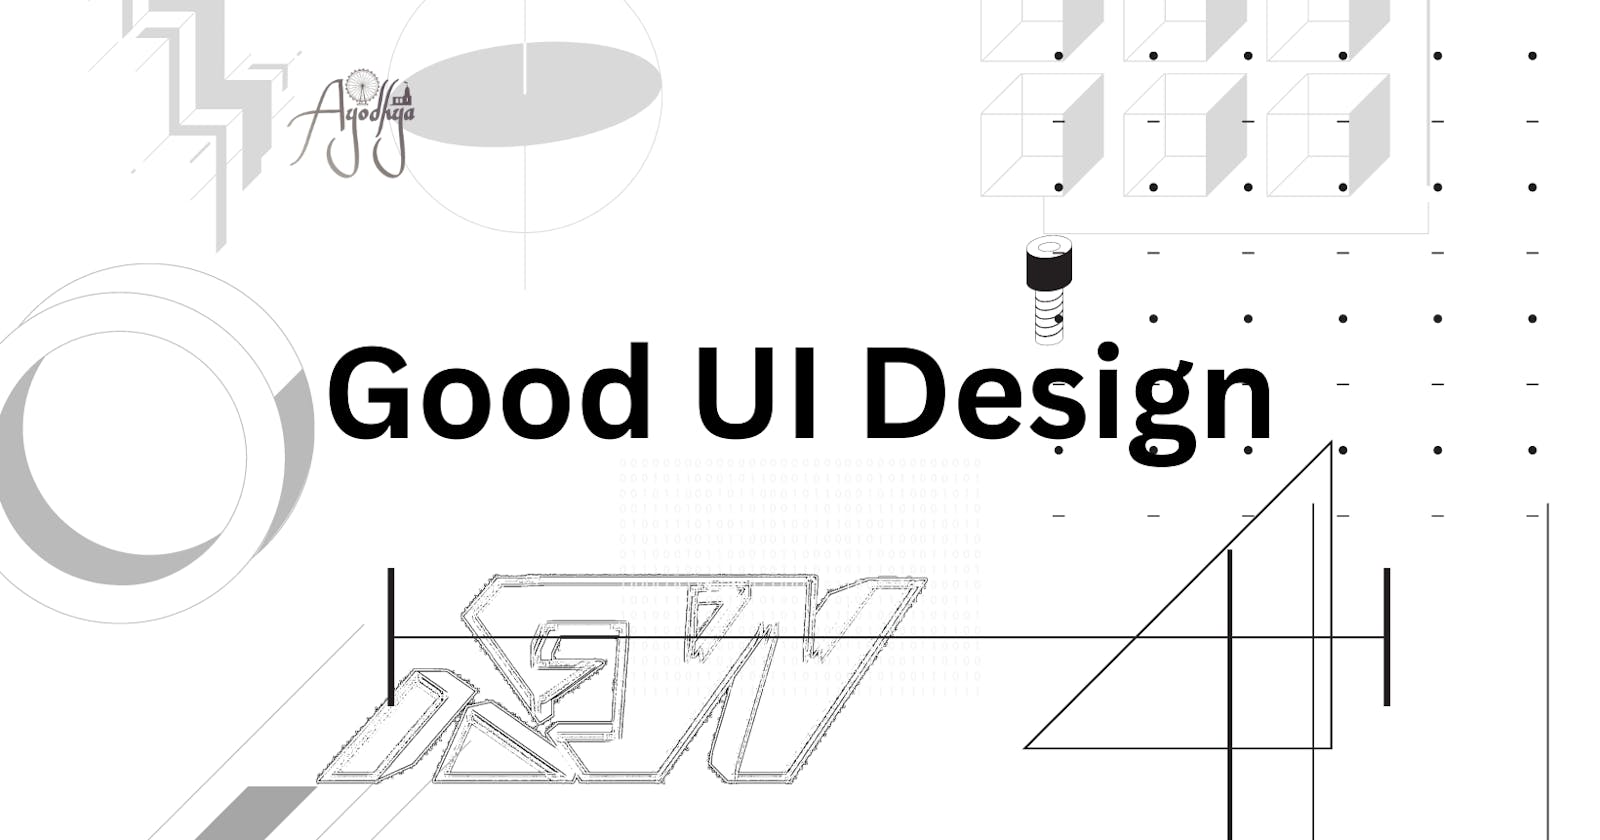 How to design a 🔥 good user interface (UI) design?